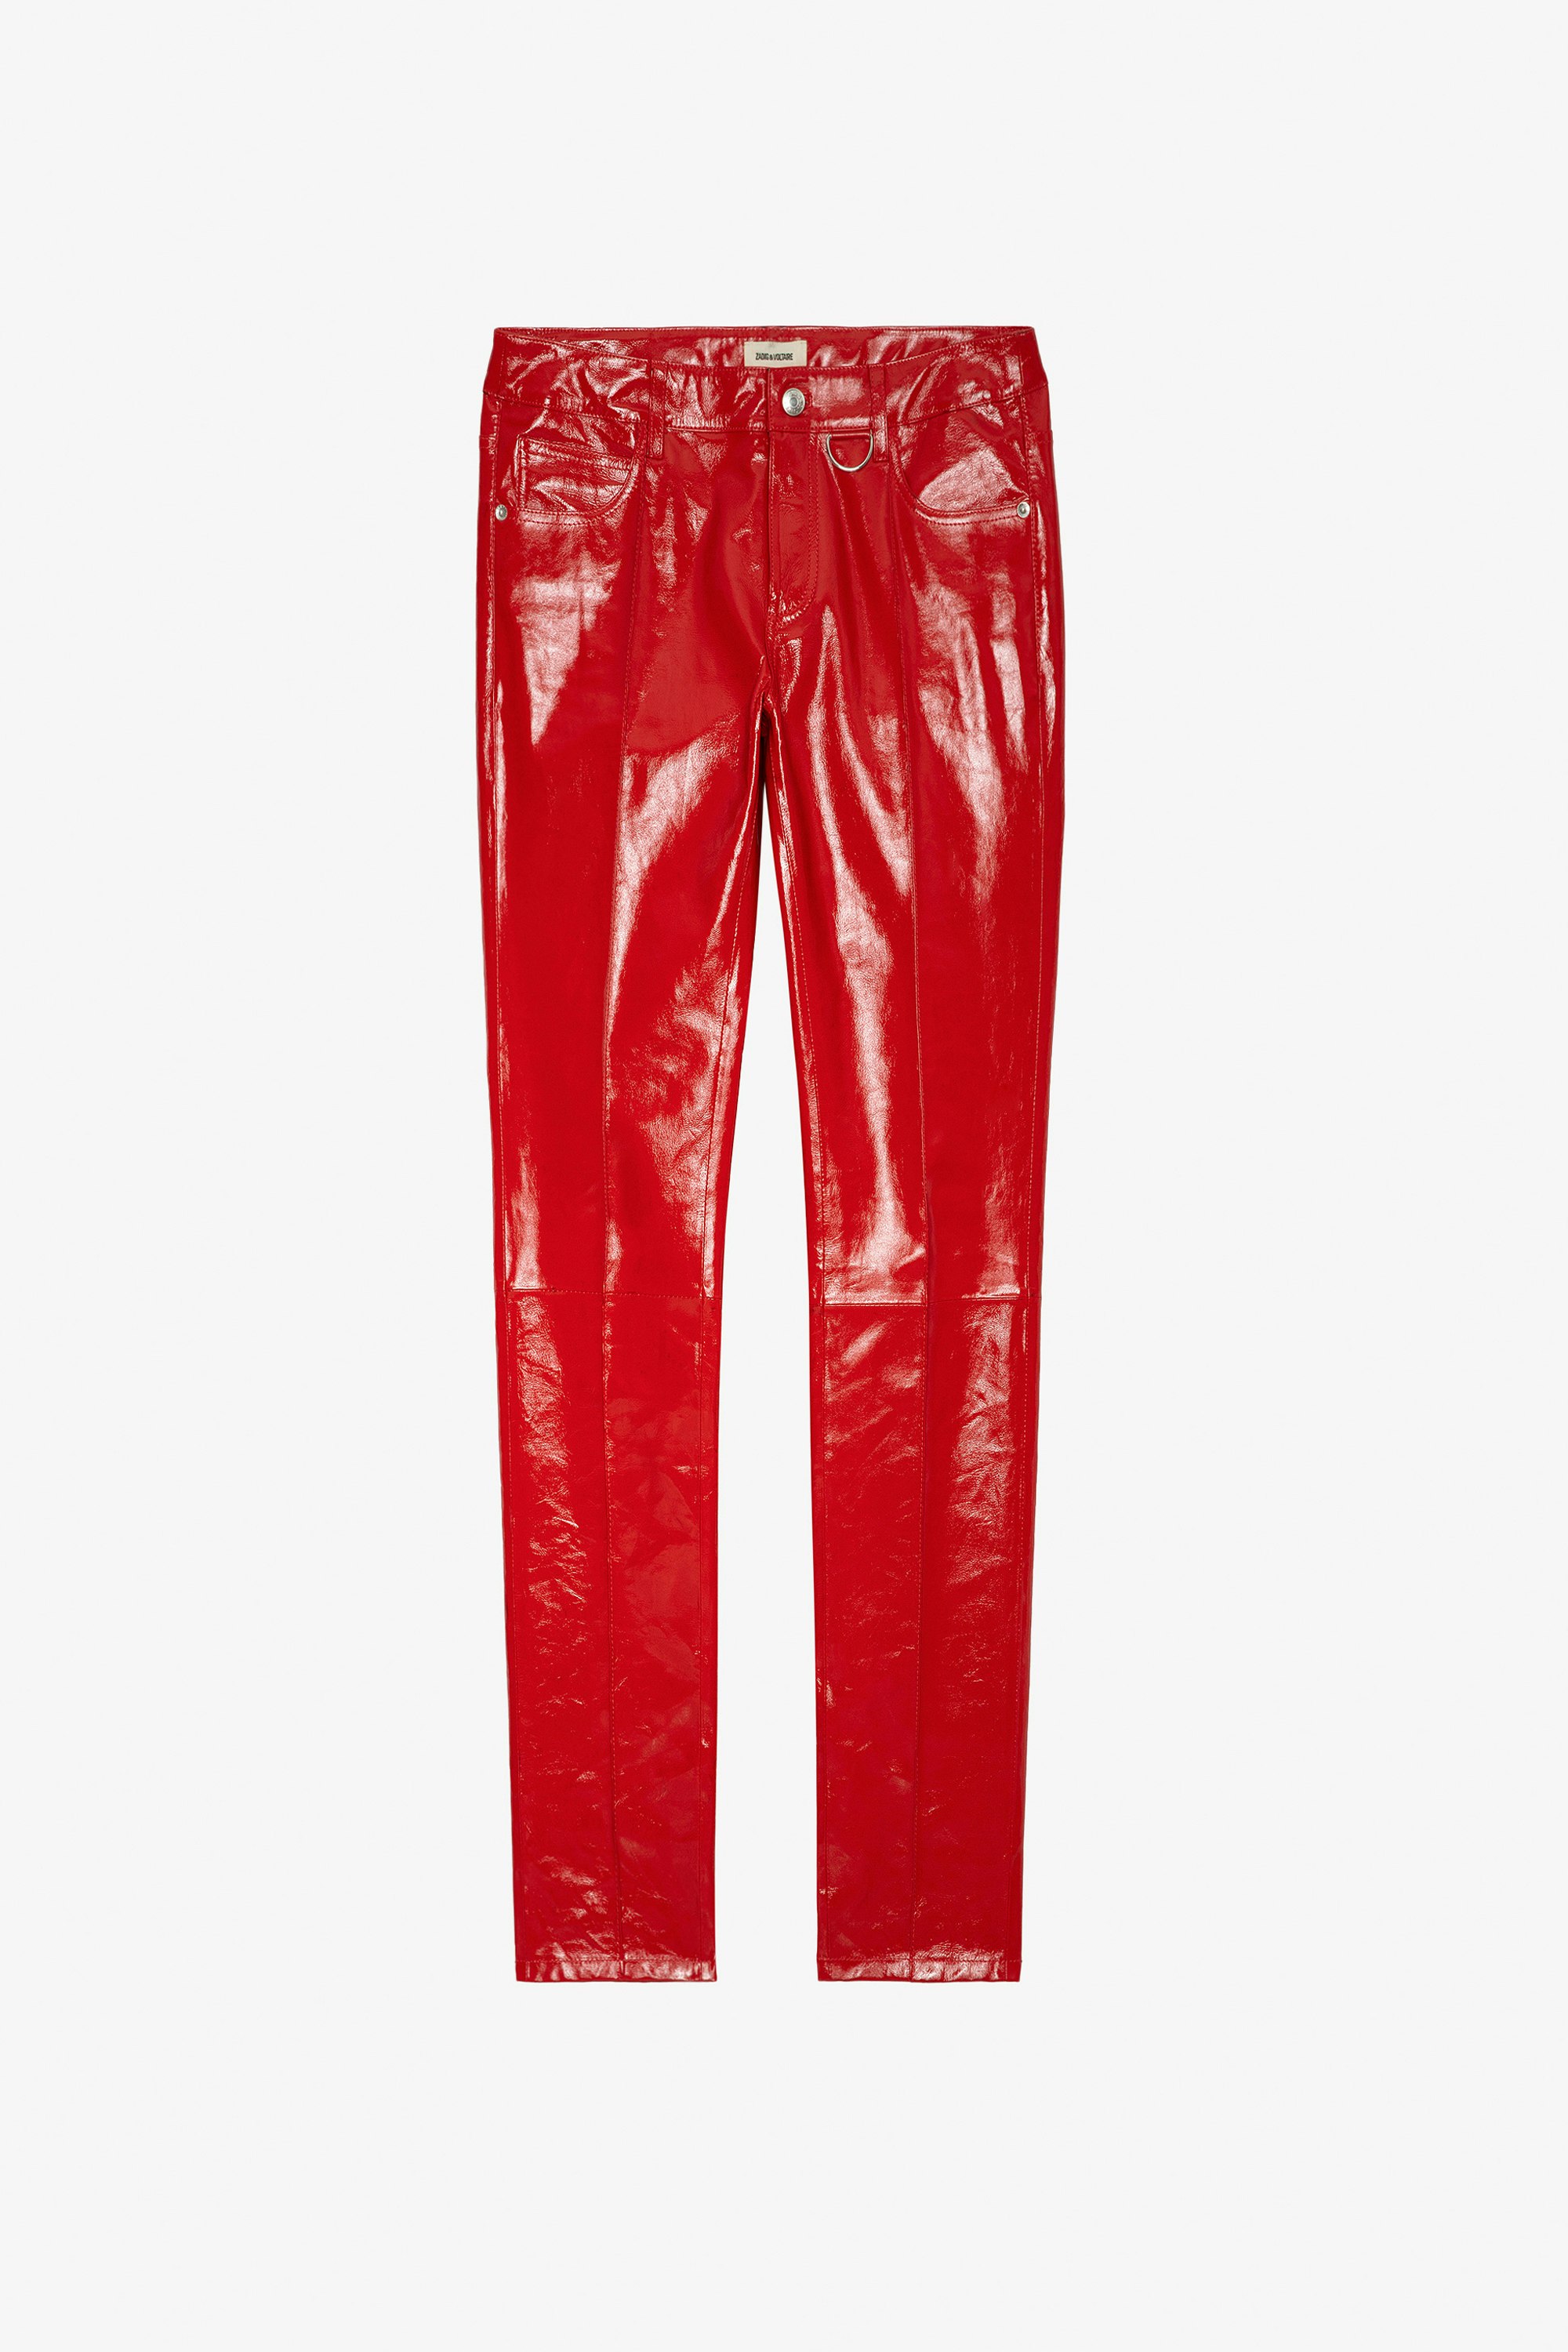 Peko Vinyl Pants - Women’s red vinyl leather pants.